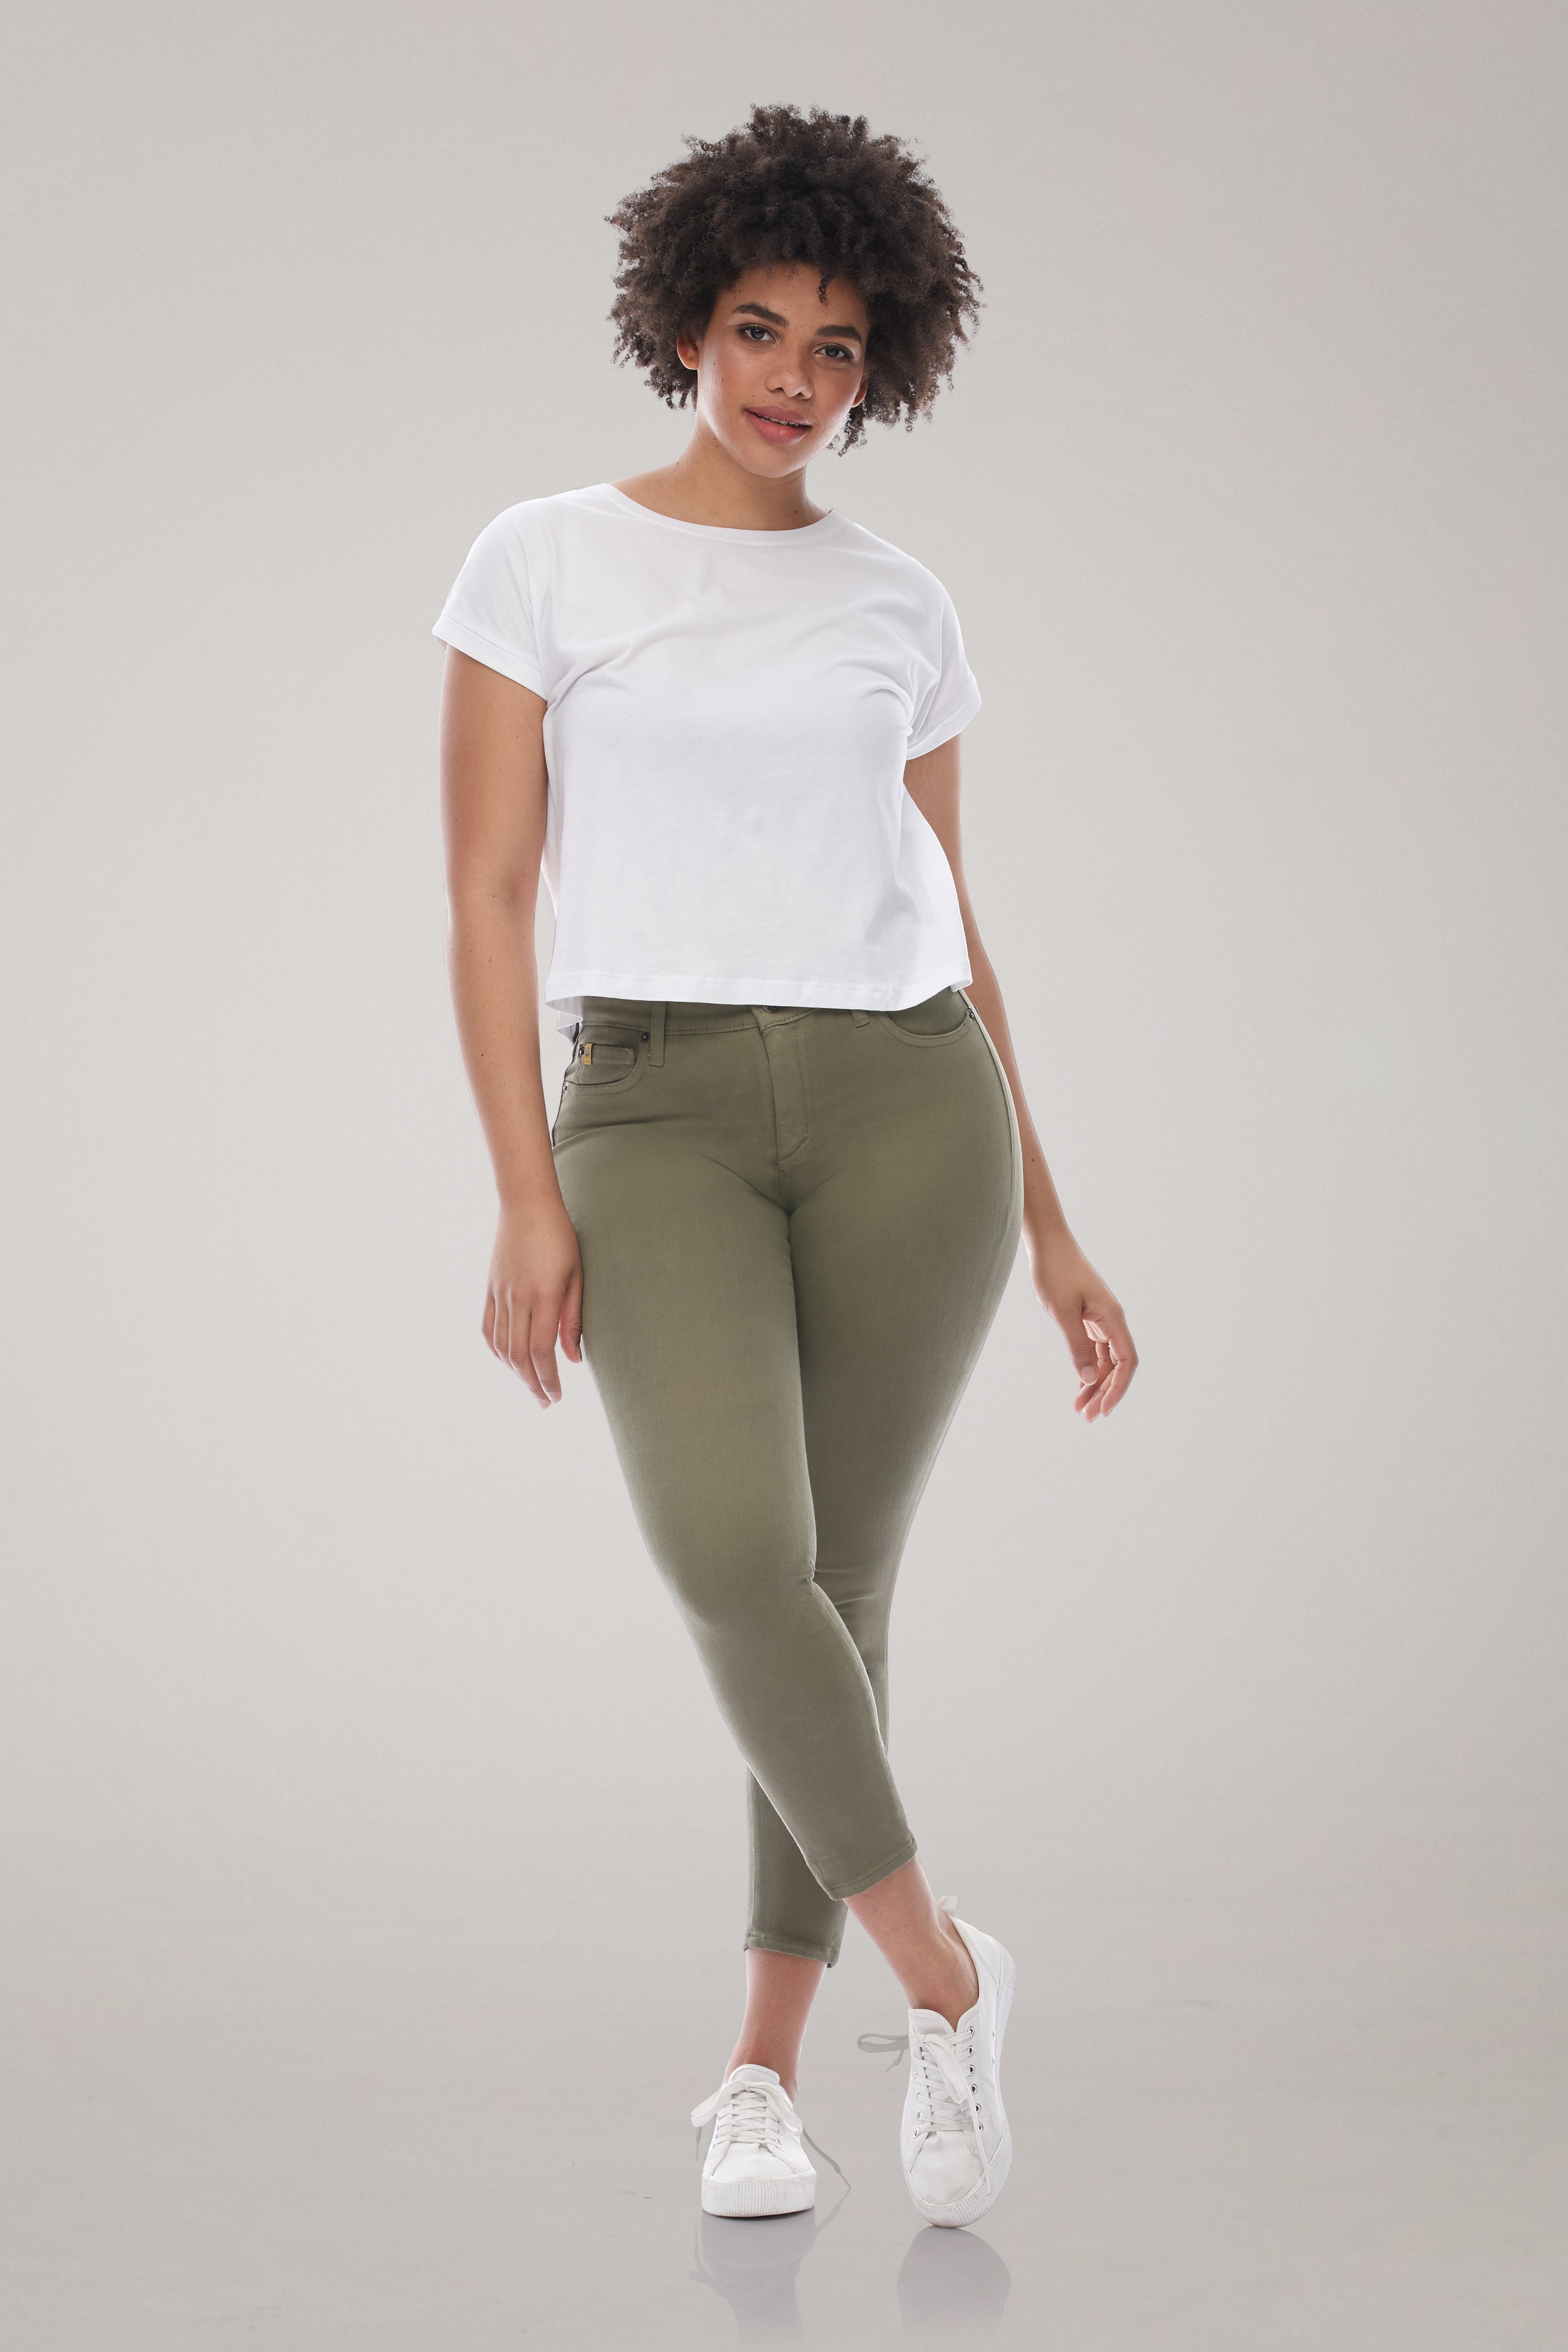 Rachel Classic Rise Skinny Ankle Yoga Jean, Desert Road, 27 inch inseam, sizes 24-34, made in Canada 